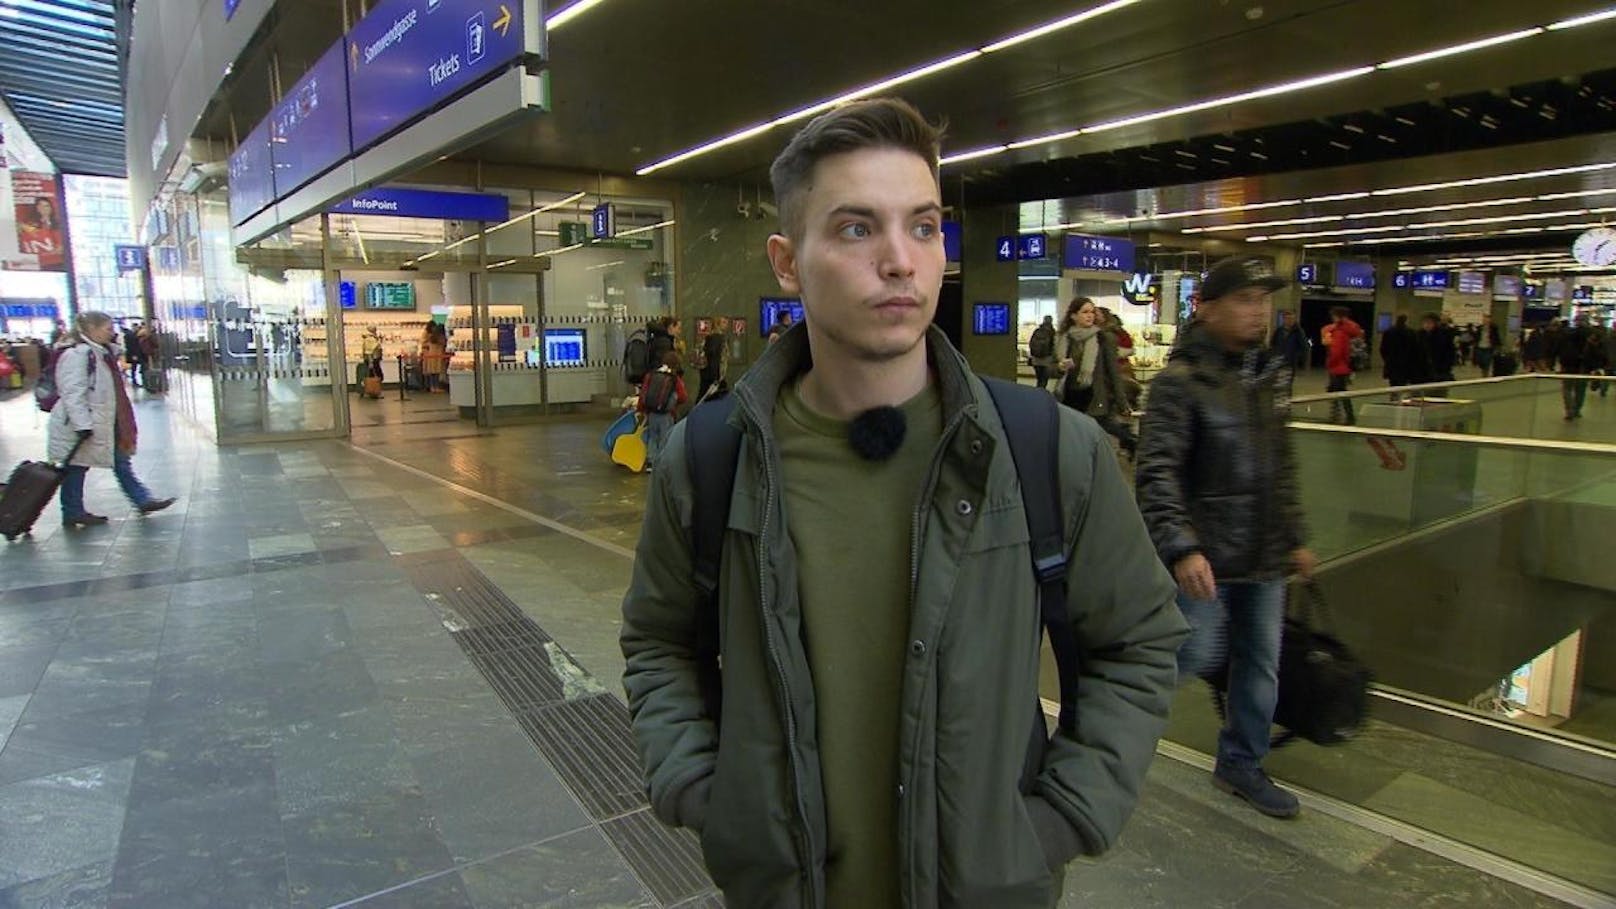 Staffelfinale bei "Teenager werden Mütter": Marcell kommt am Wiener Hauptbahnhof an